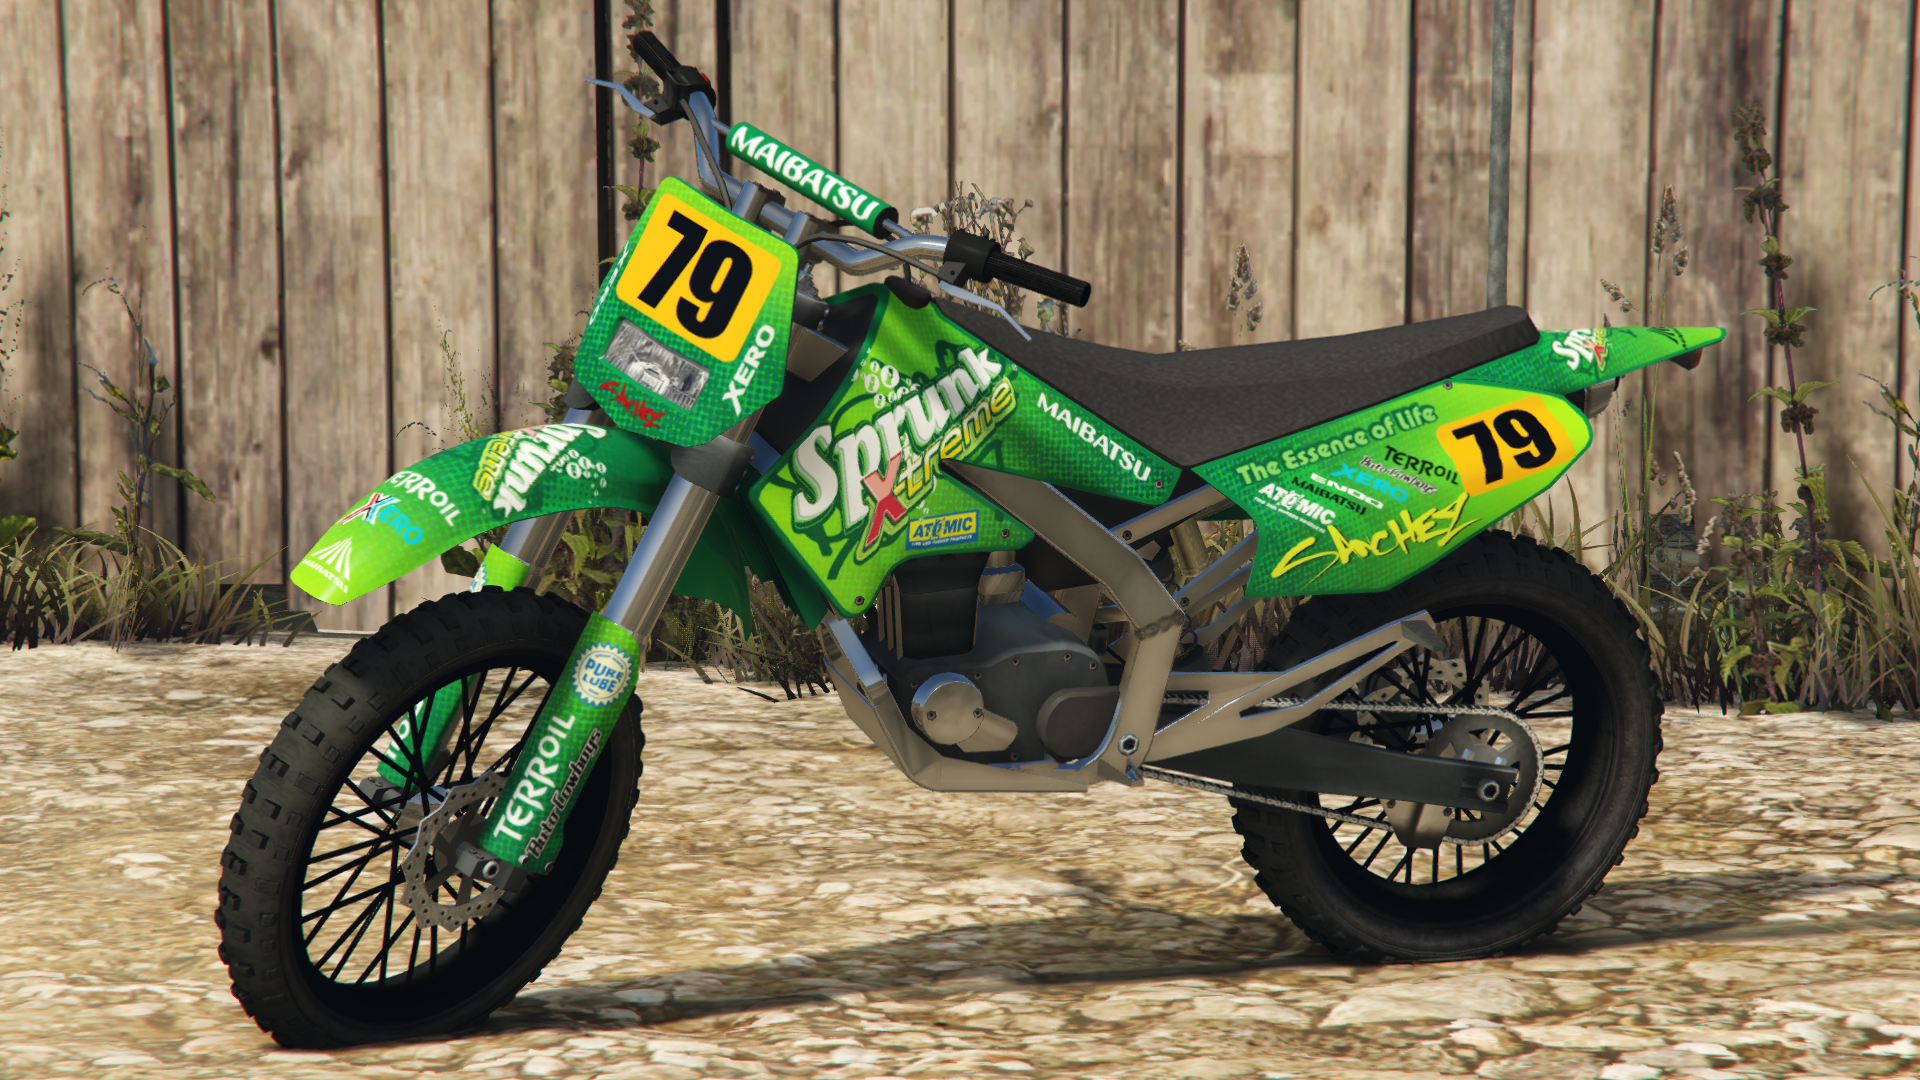 Gta 5 зеленый мотоцикл (120) фото